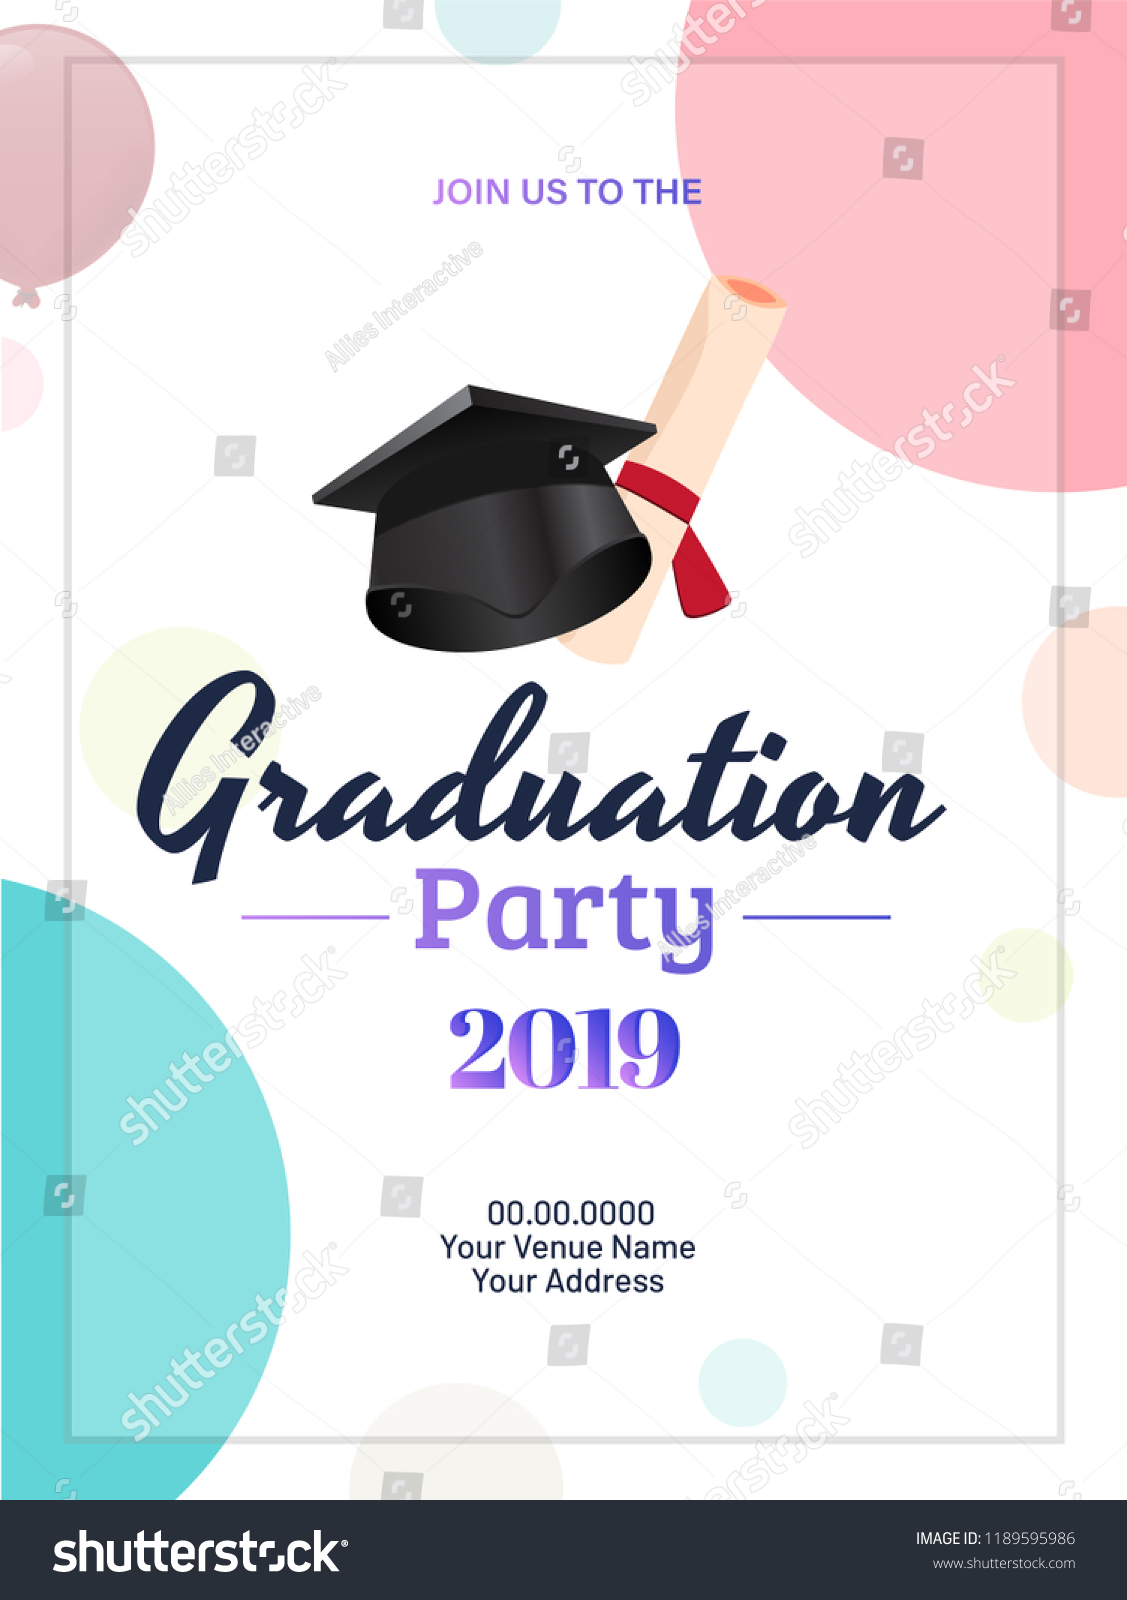 Graduation Party 2019 Invitation Card Template Stock Vector In Graduation Party Flyer Template